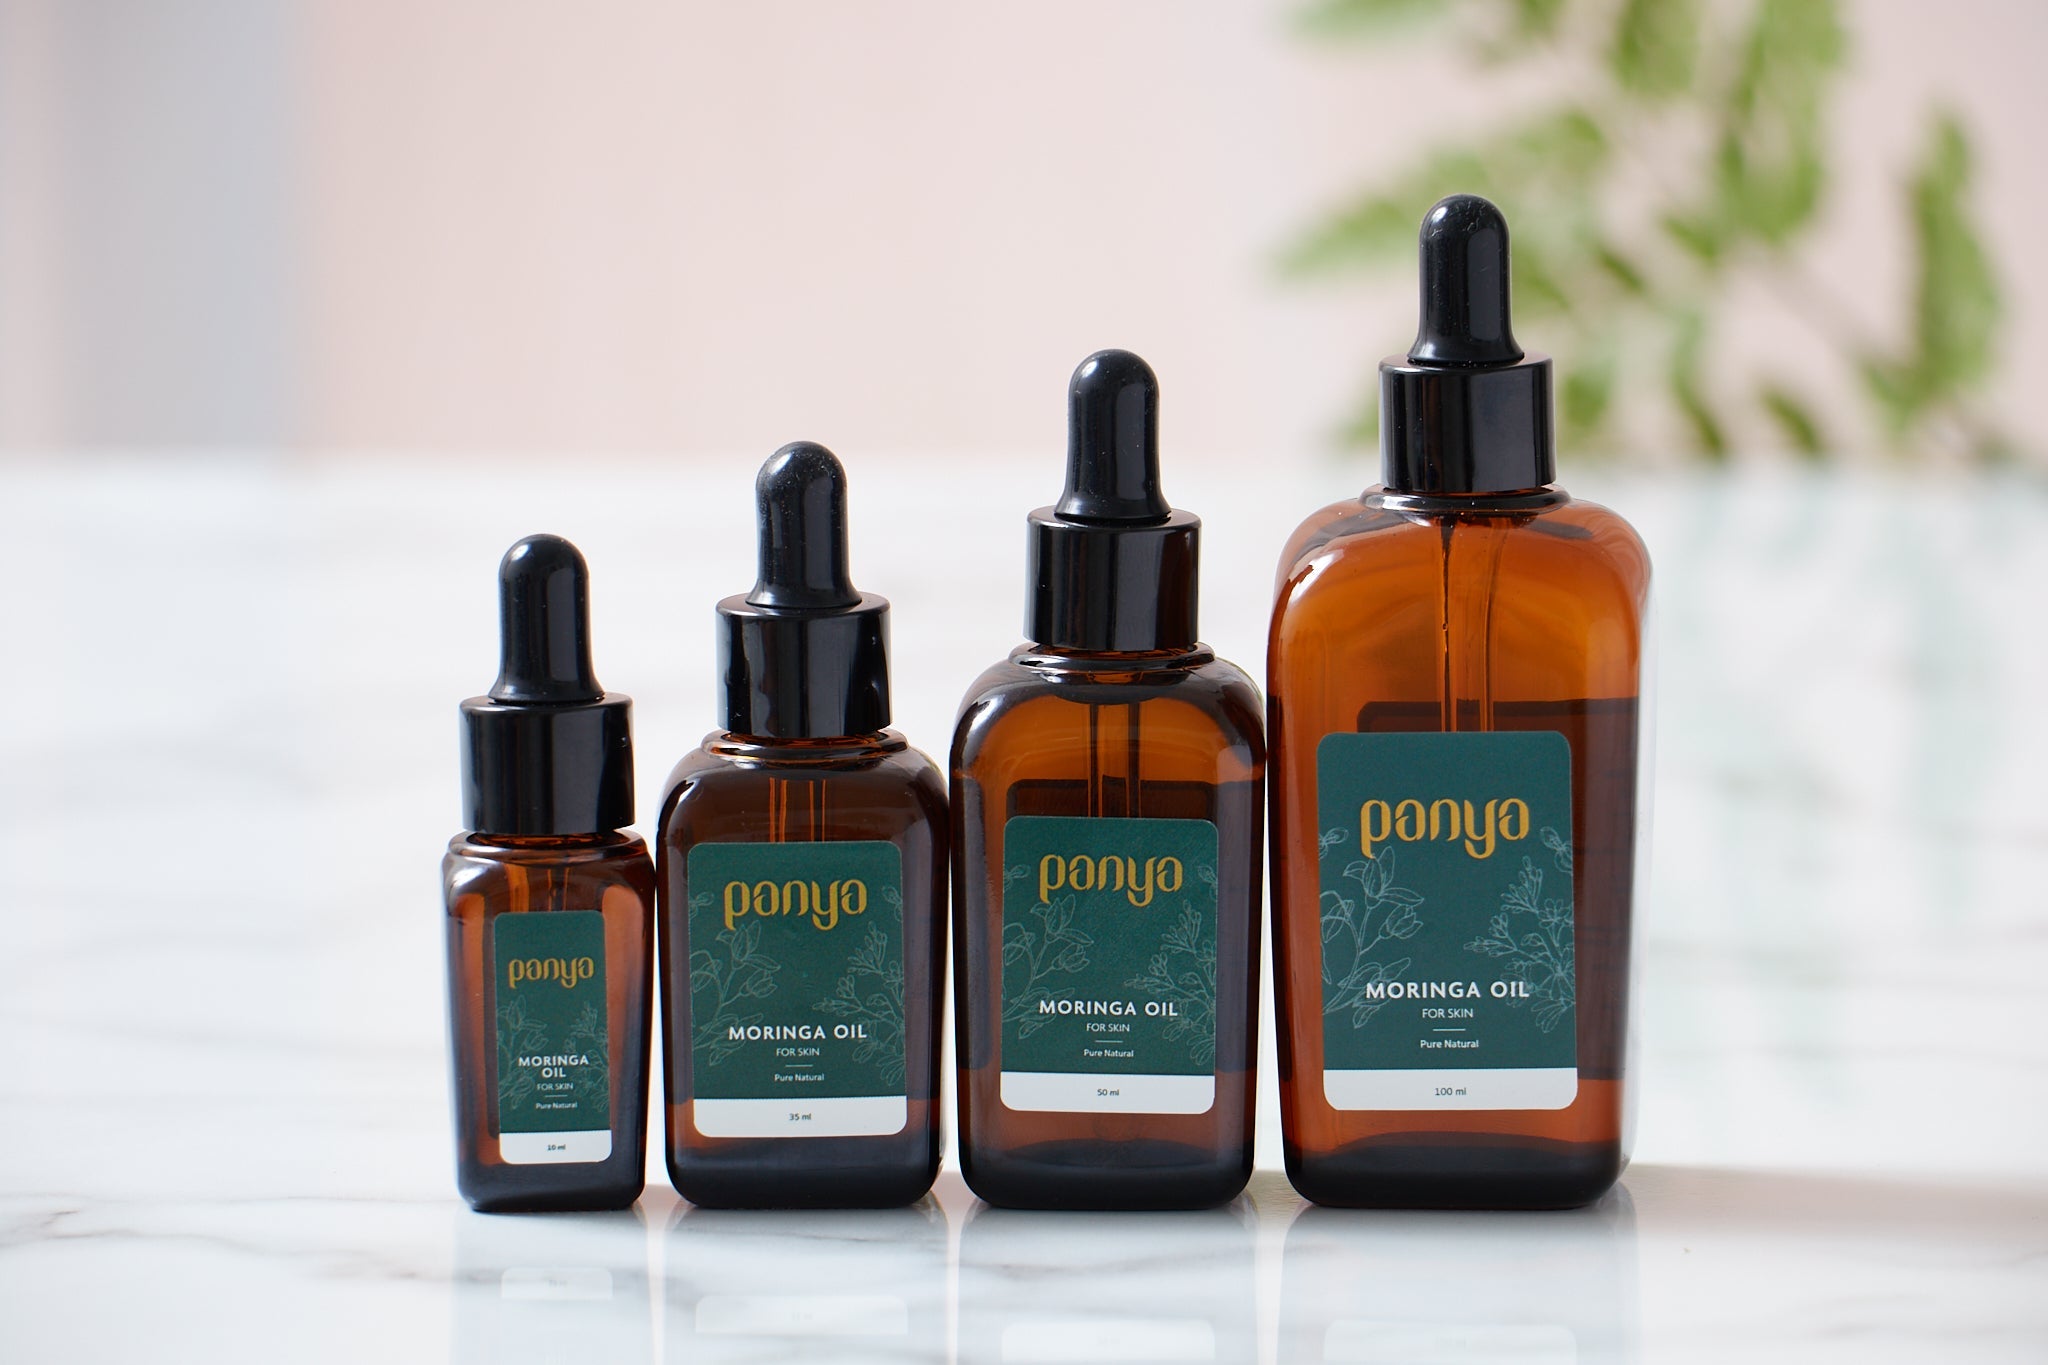 Panya 100% Moringa Oil: vegan Thai-grown cold-pressed virgin moringa oil with 46 antioxidants for strong, smooth skin. 